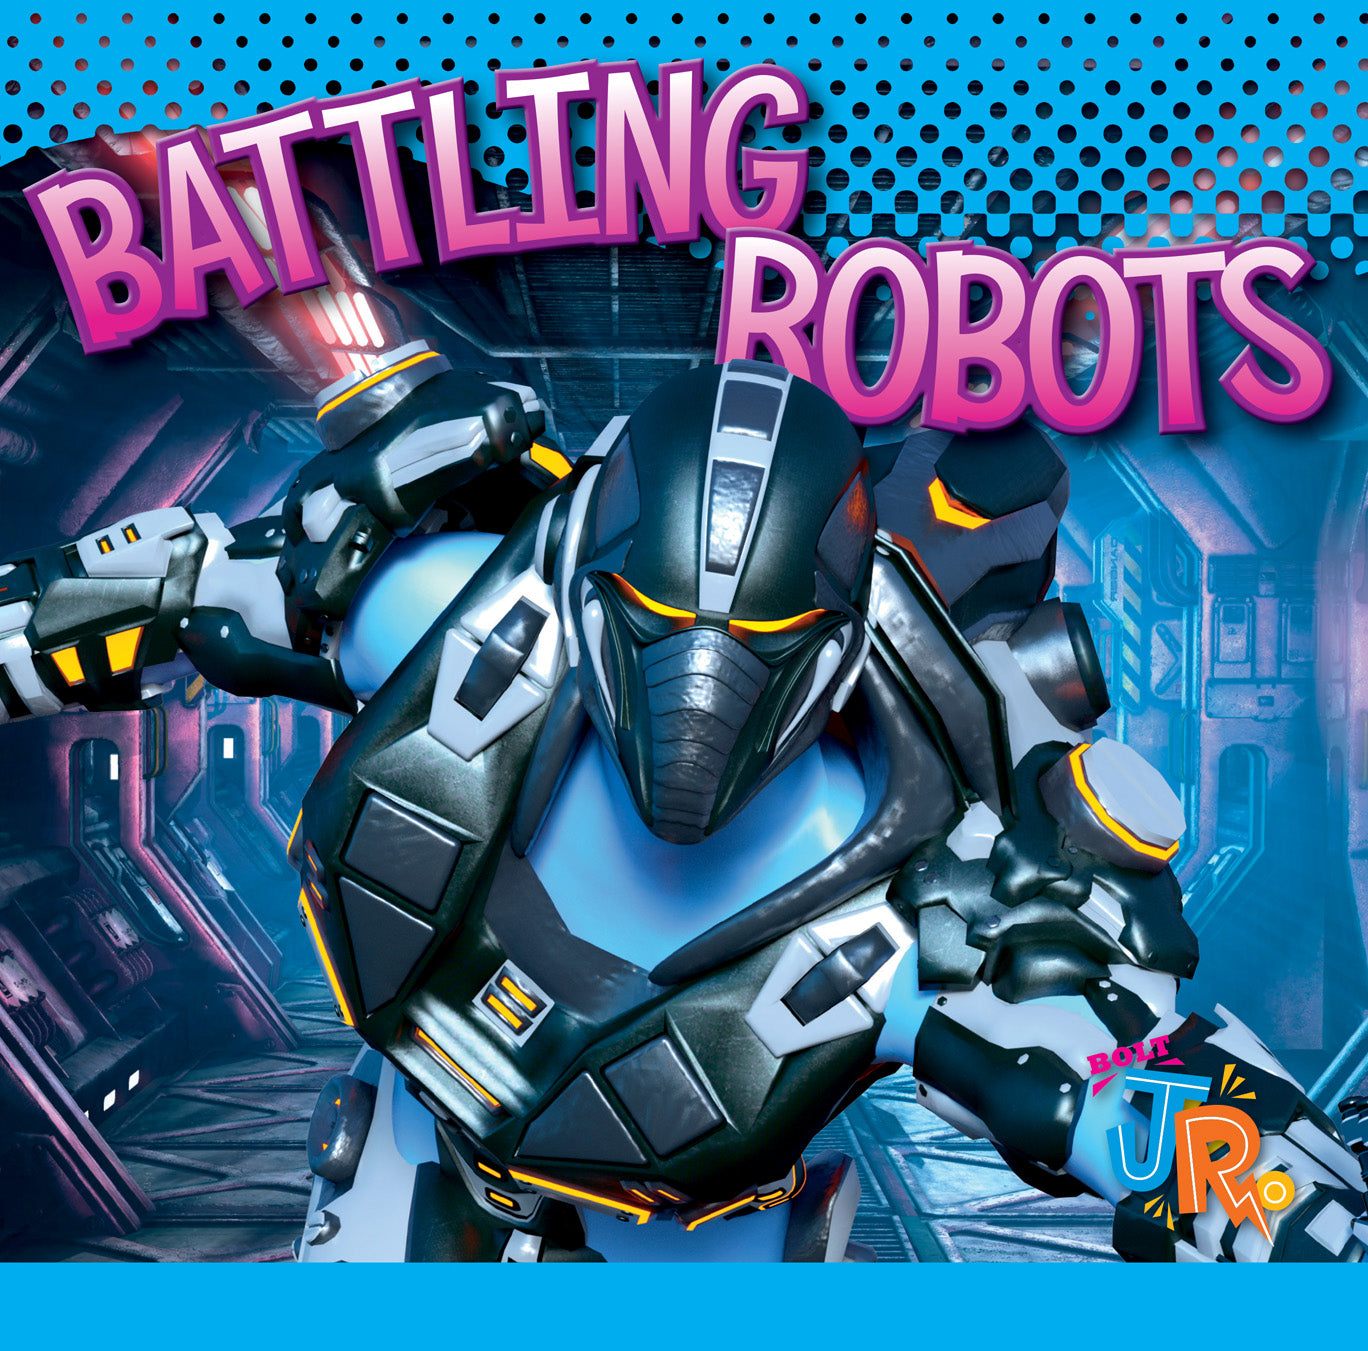 World of Robots: Battling Robots